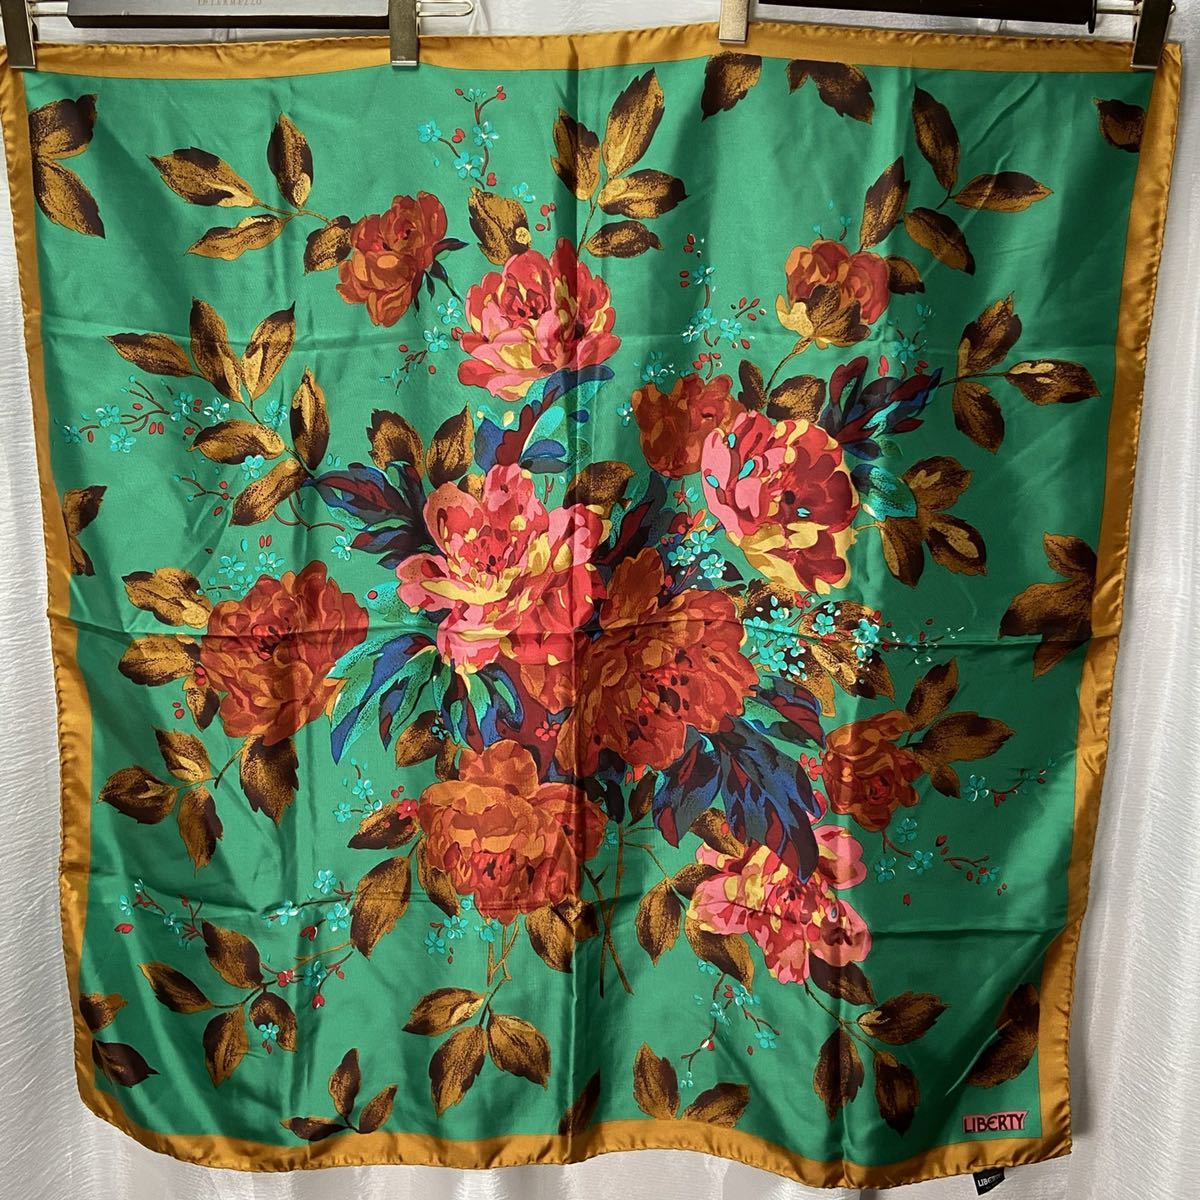 LIBERTY Liberty flower motif silk scarf 